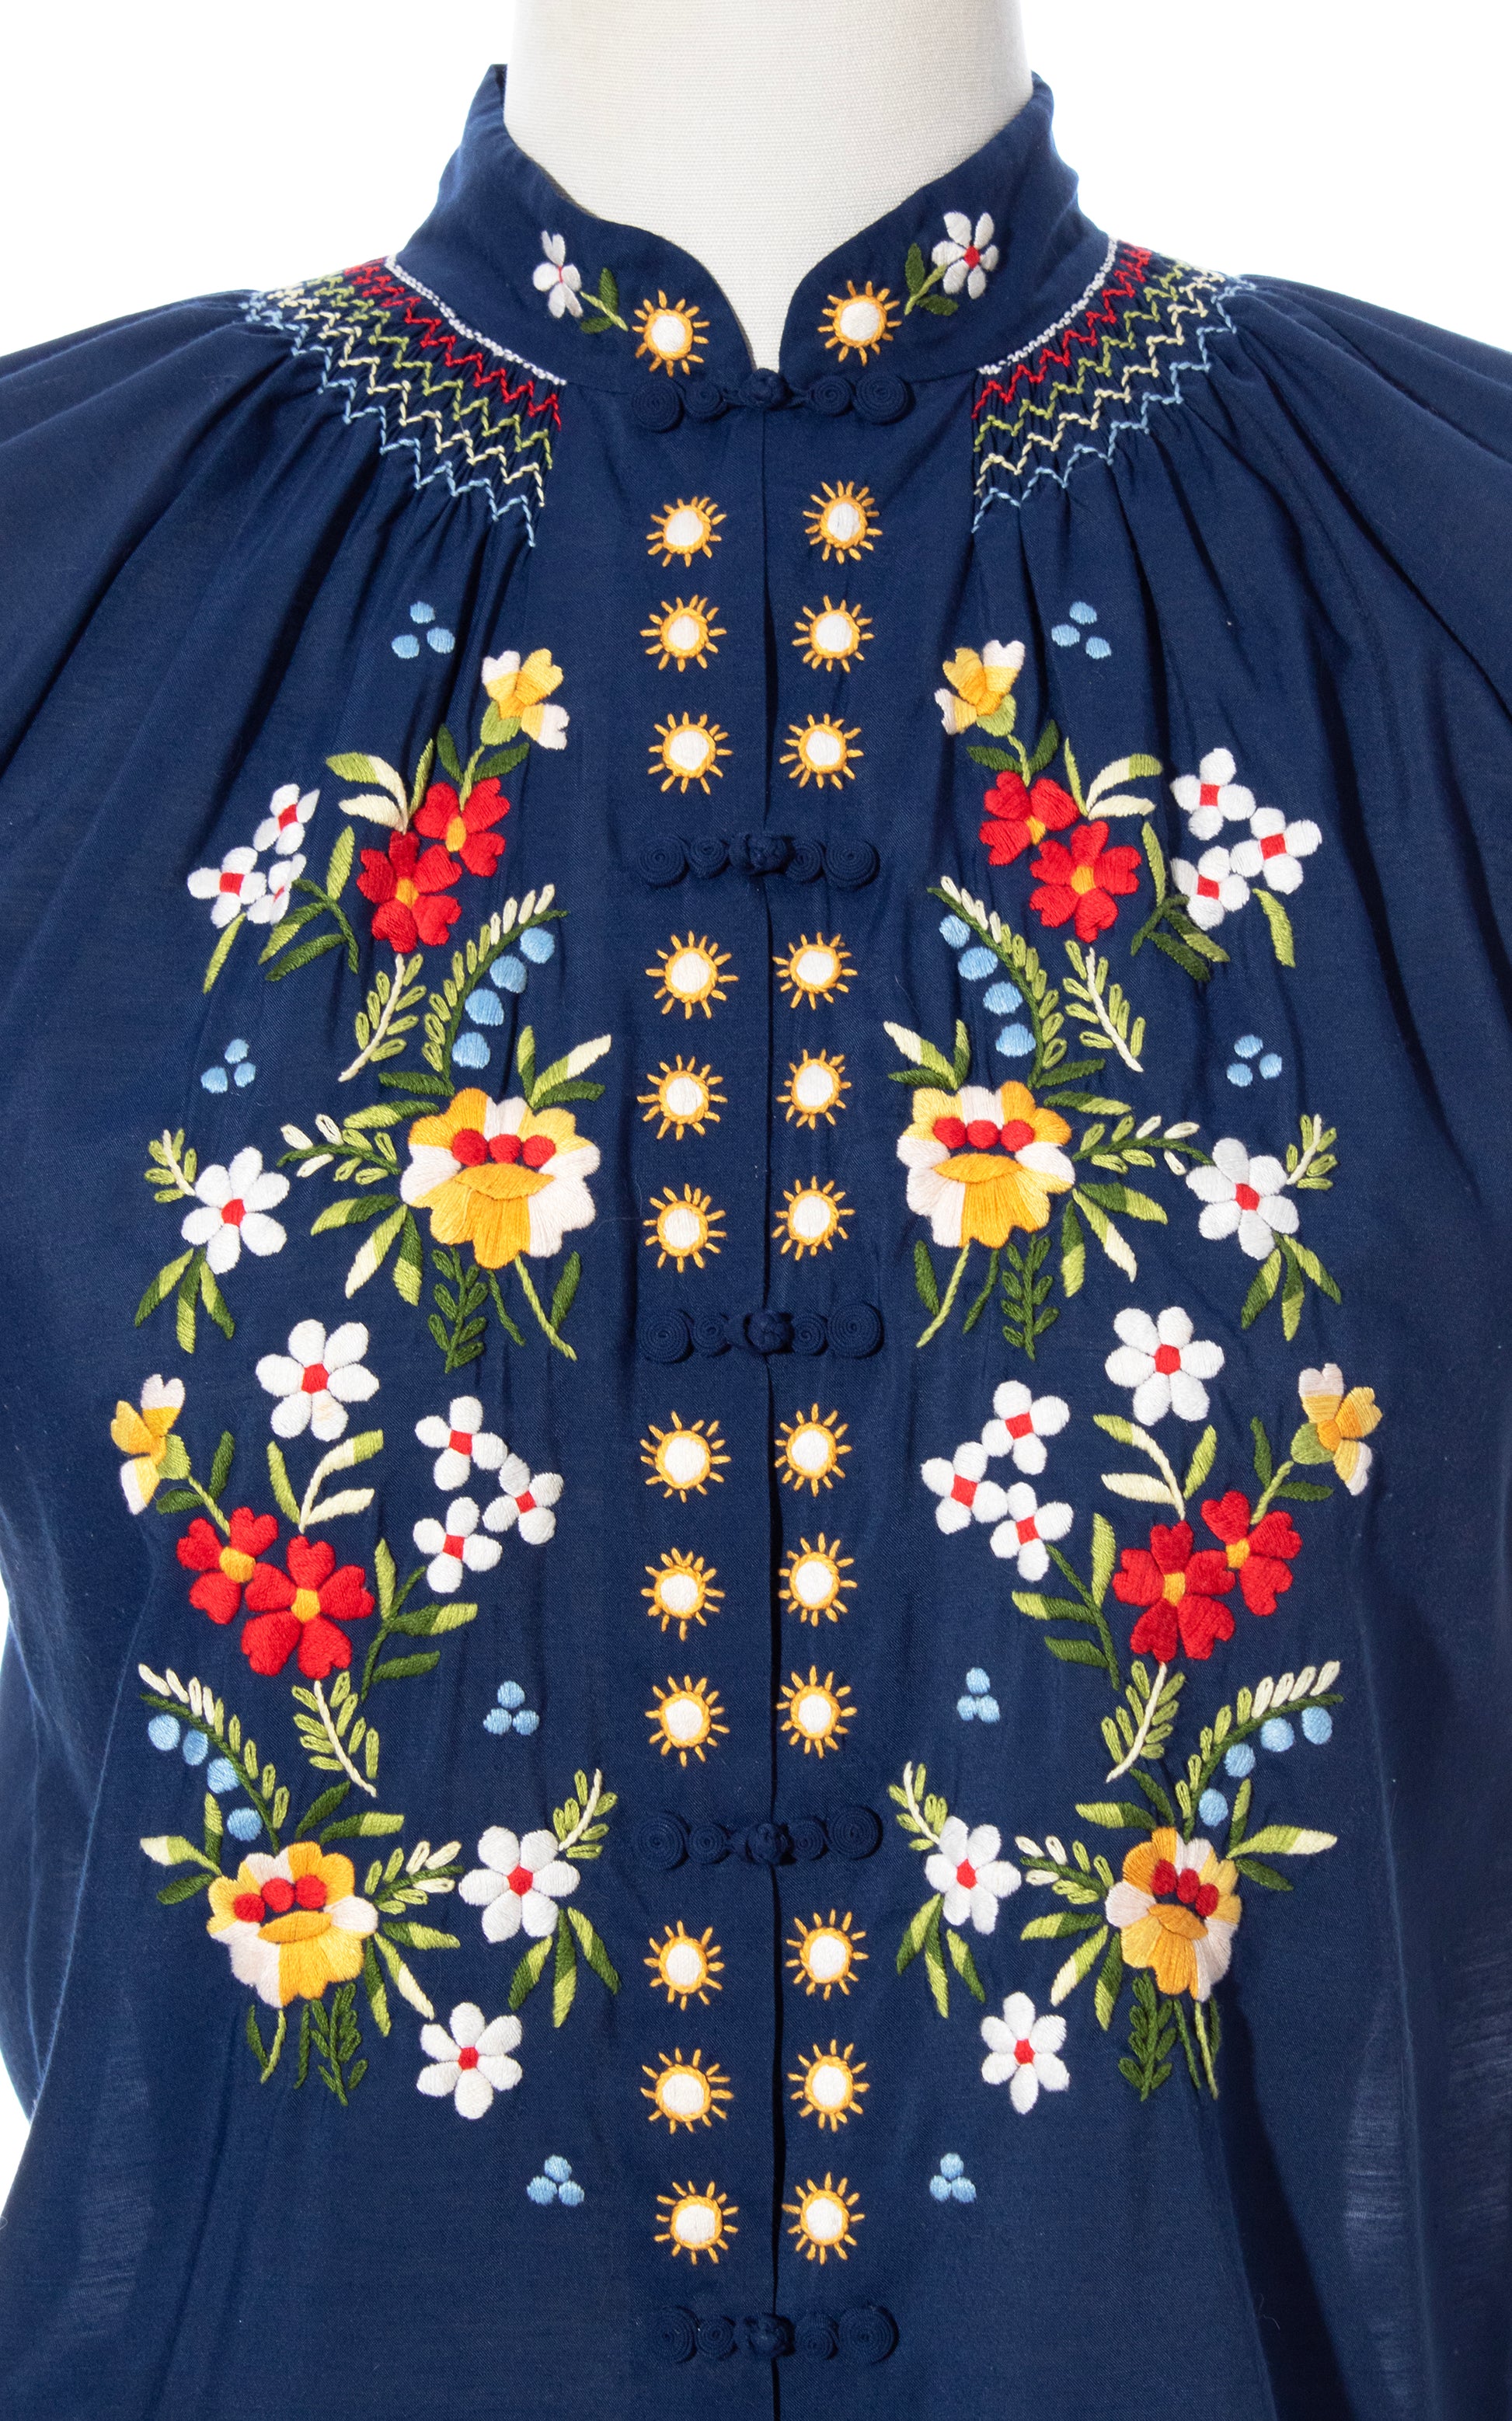 Vintage 70s 1970s Floral Embroidered Navy Blue Peasant Top BirthdayLifeVintage